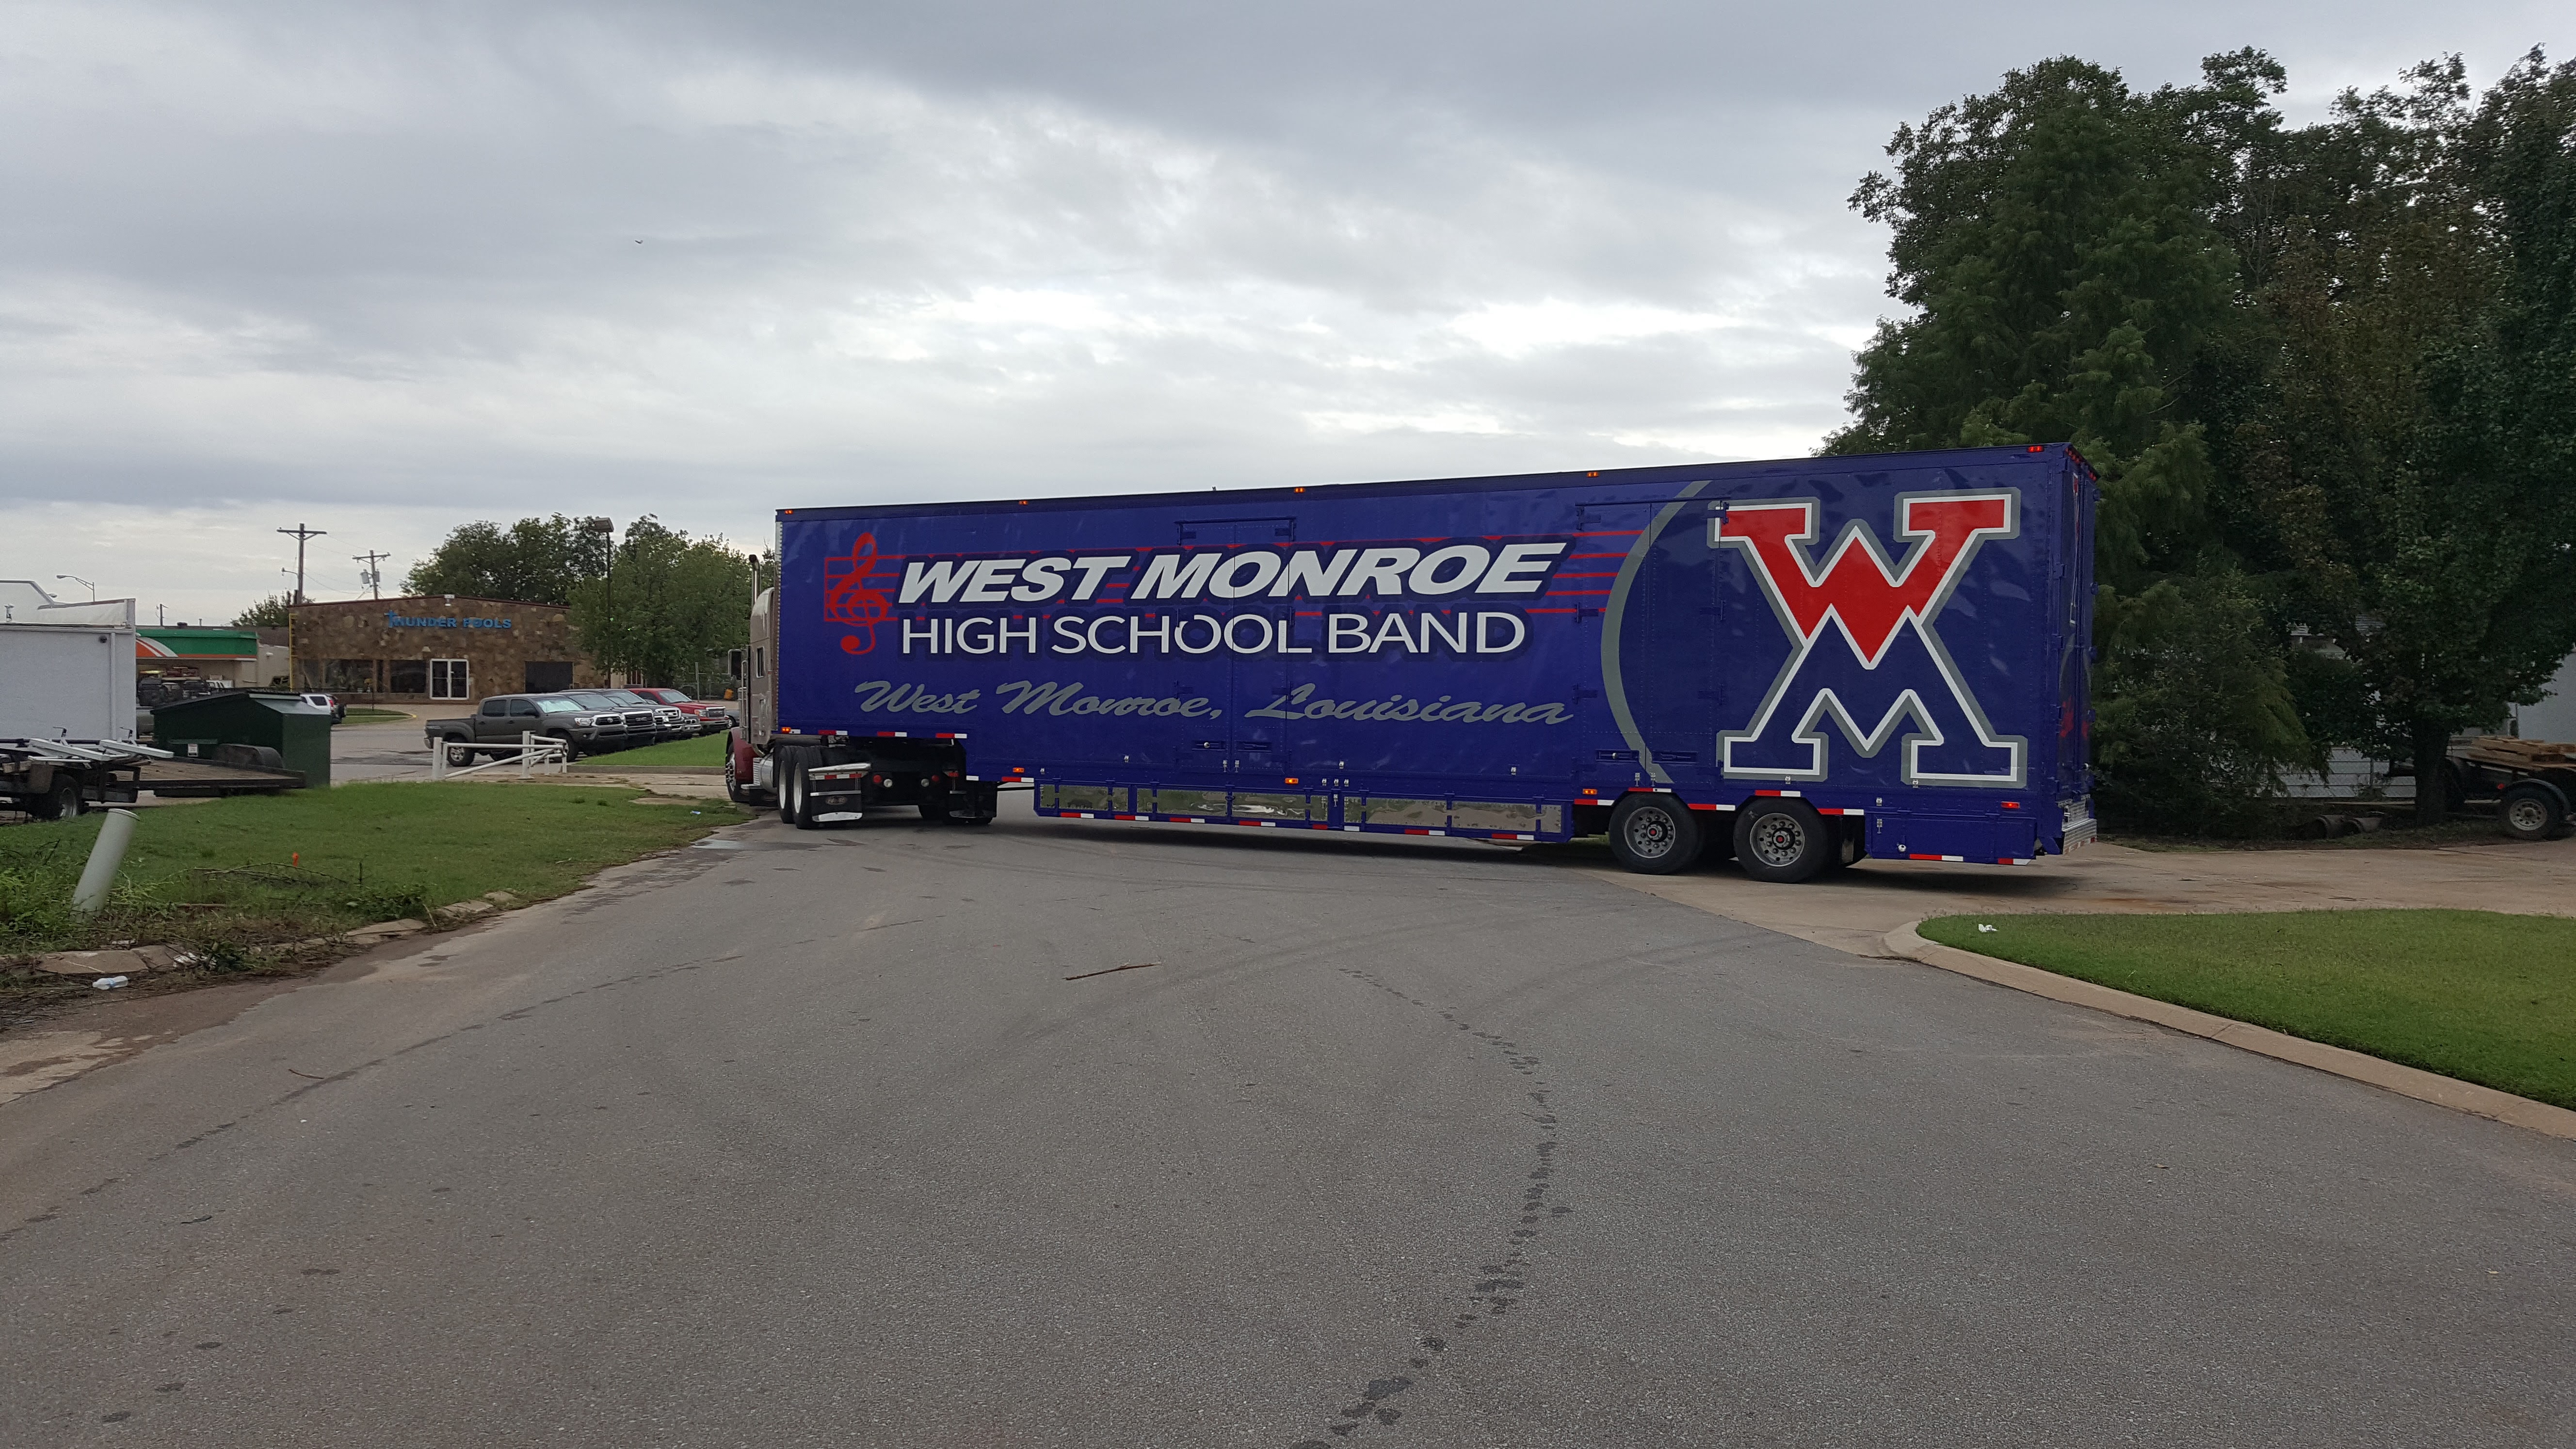 West Monroe High School Marching Band Semi Trailer